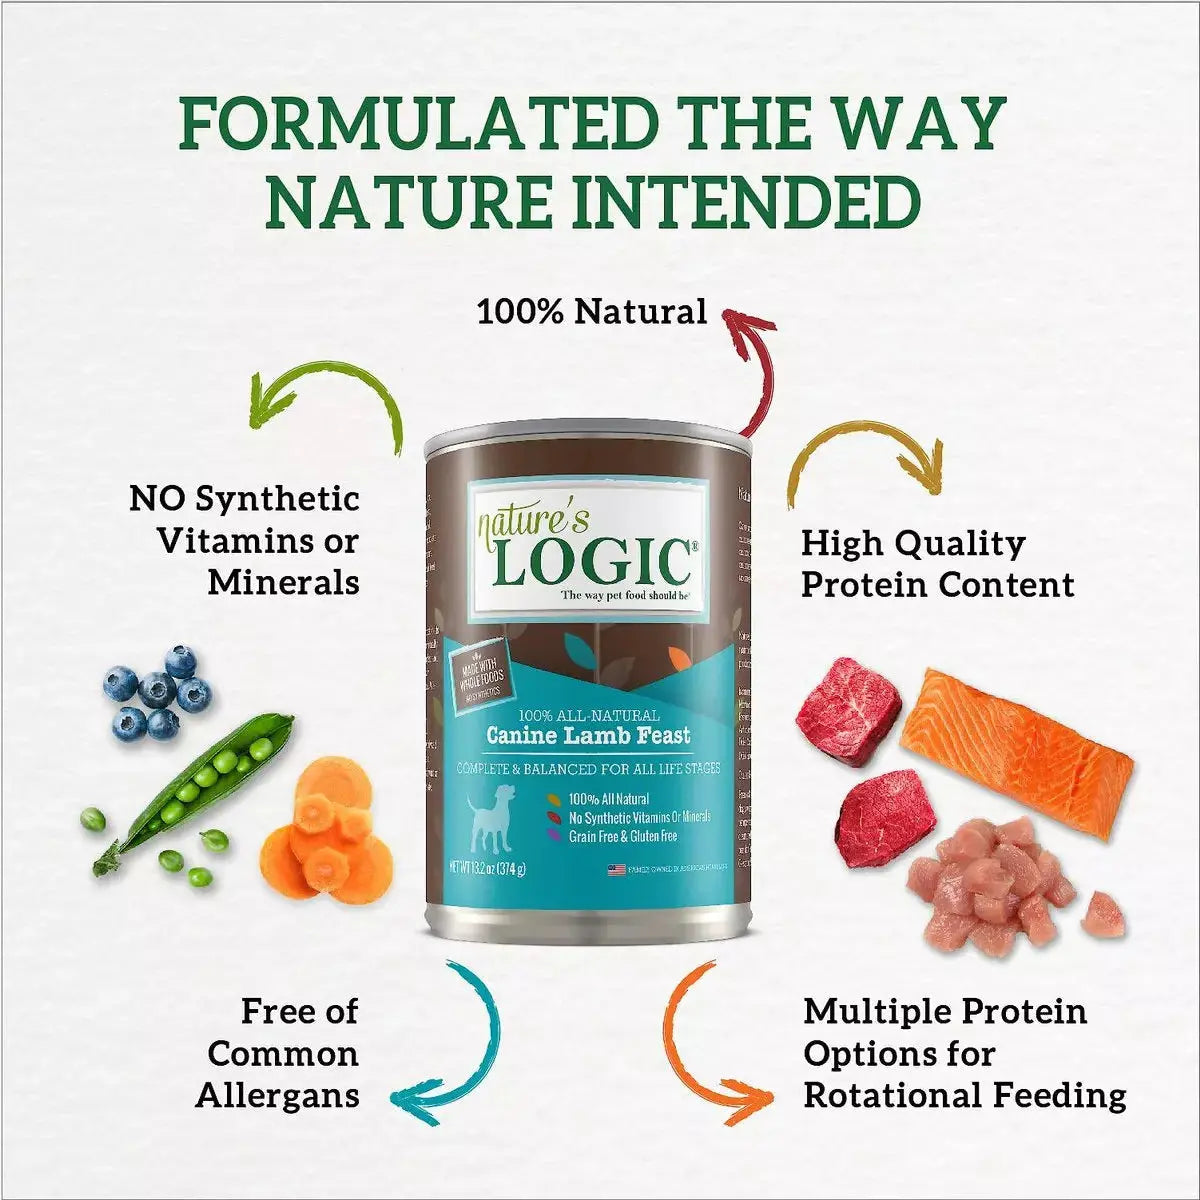 Nature's Logic Lamb Feast Grain-Free Canned Dog Food 13.2 oz case of 12 Nature's Logic